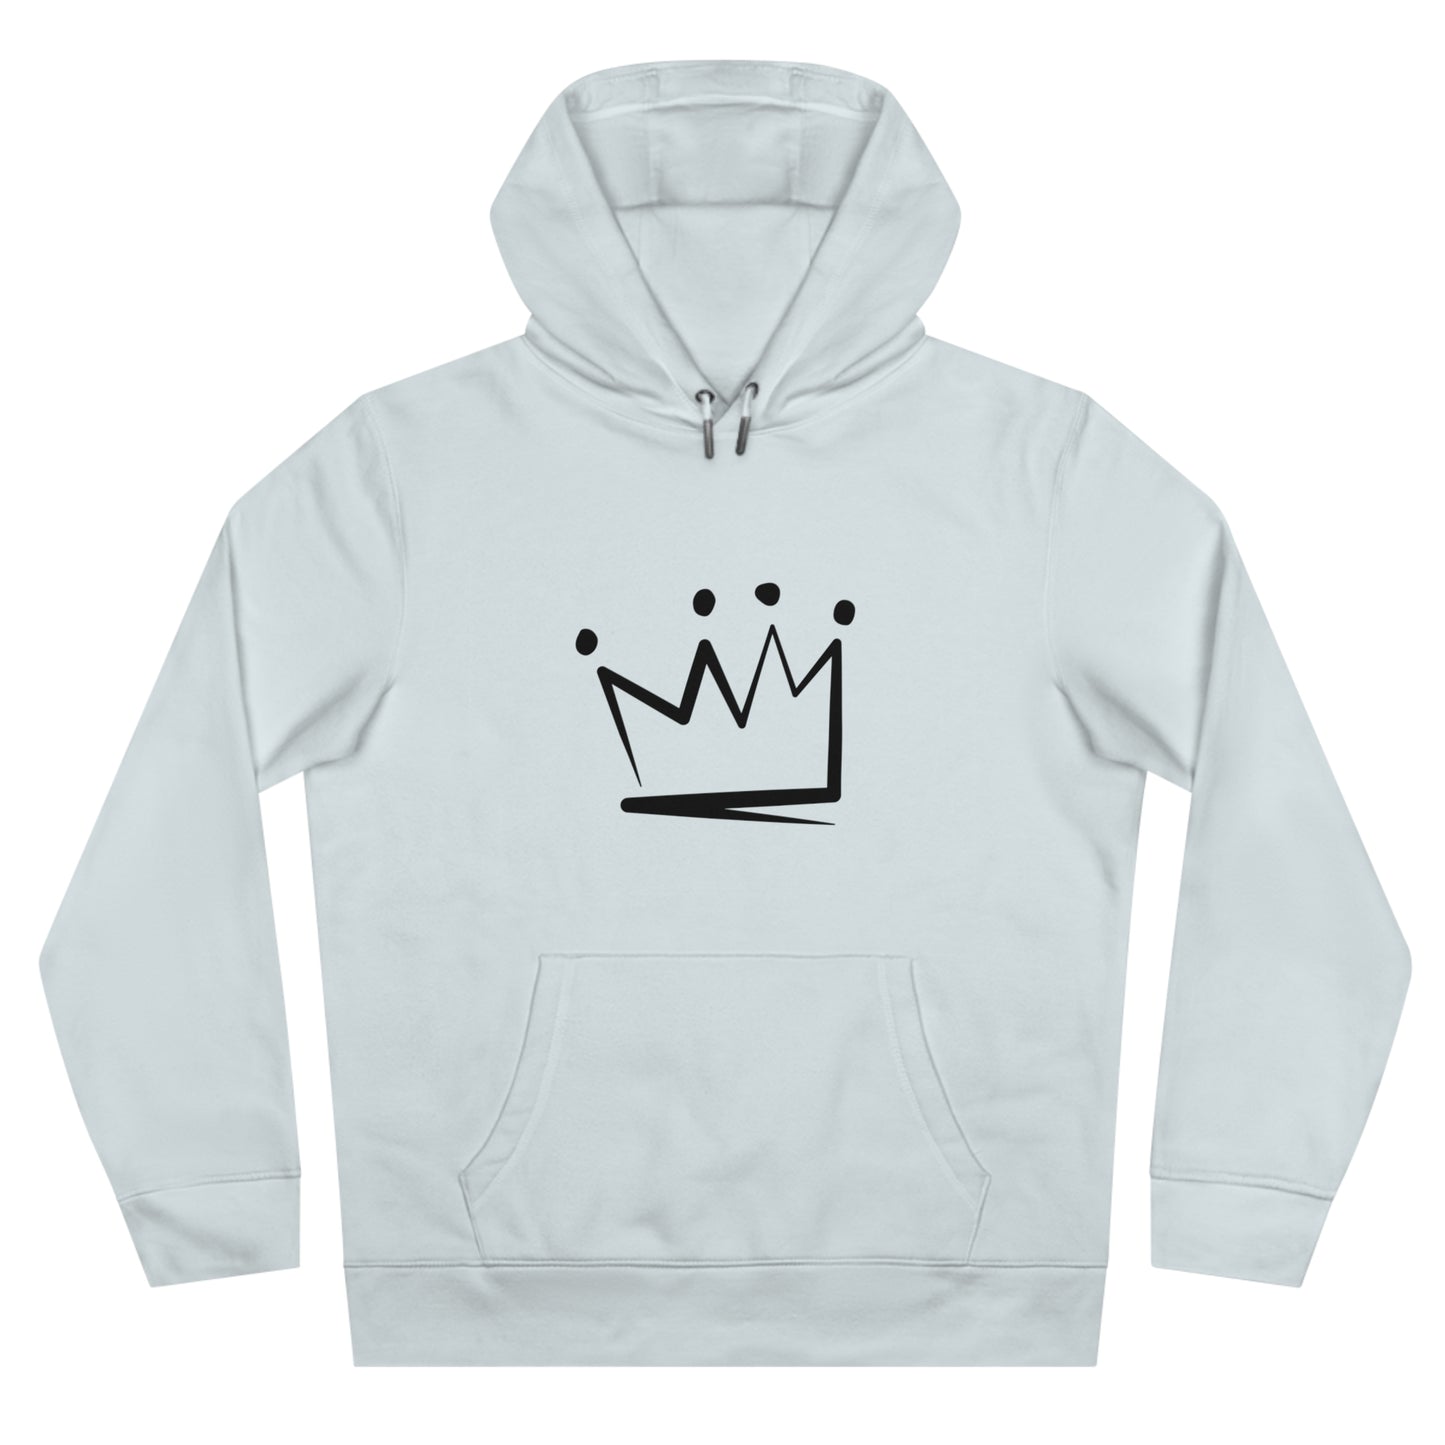 King Hooded Sweatshirt